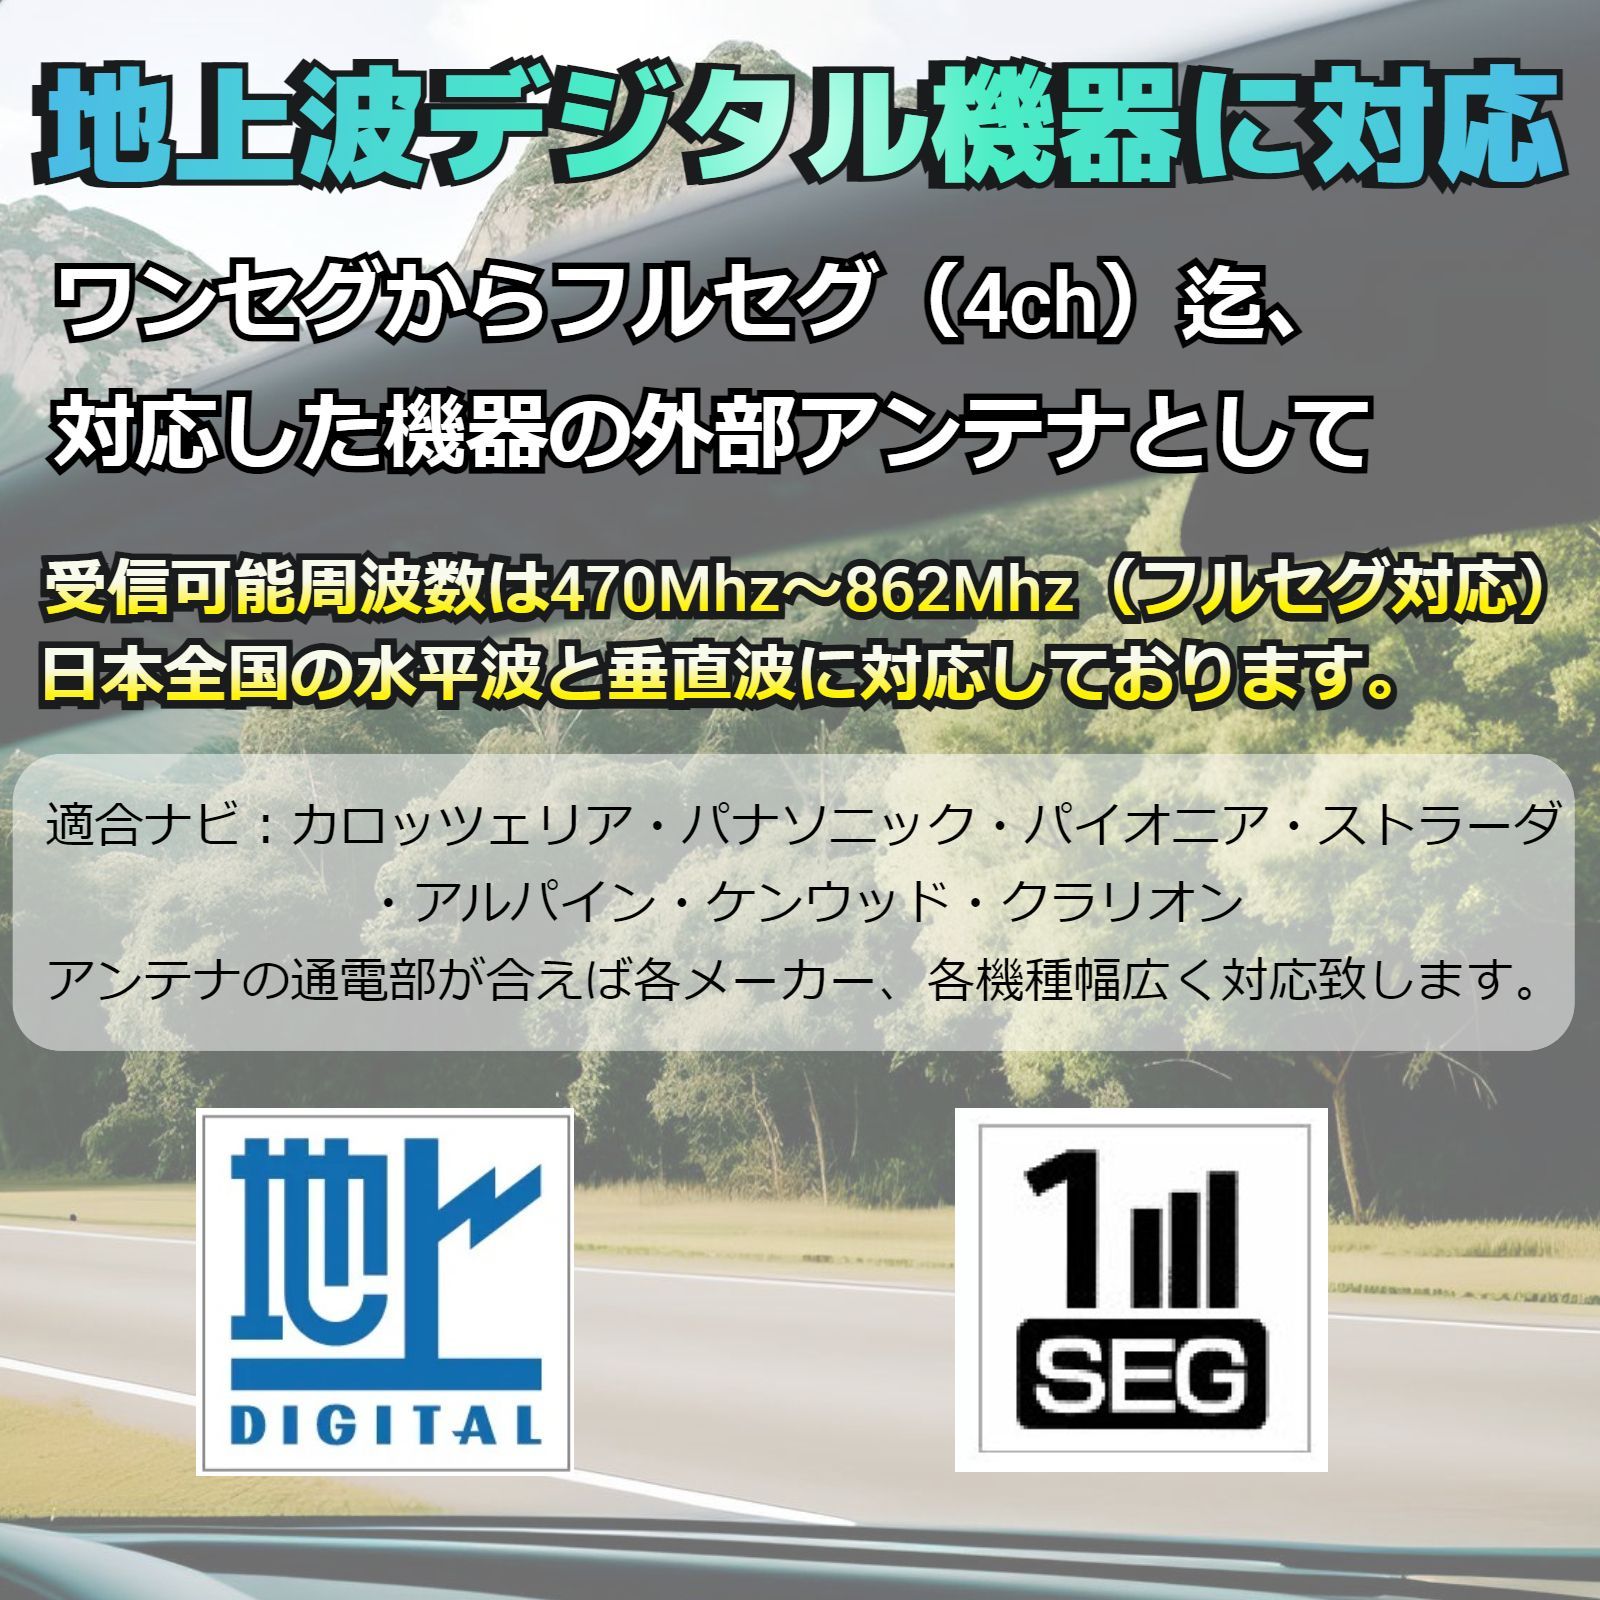 NSZT-W62G トヨタ GPS 一体型 地デジ フィルムアンテナ 両面テープ 取説 ガラスクリーナー付 送料無料 △GL1105 - メルカリ